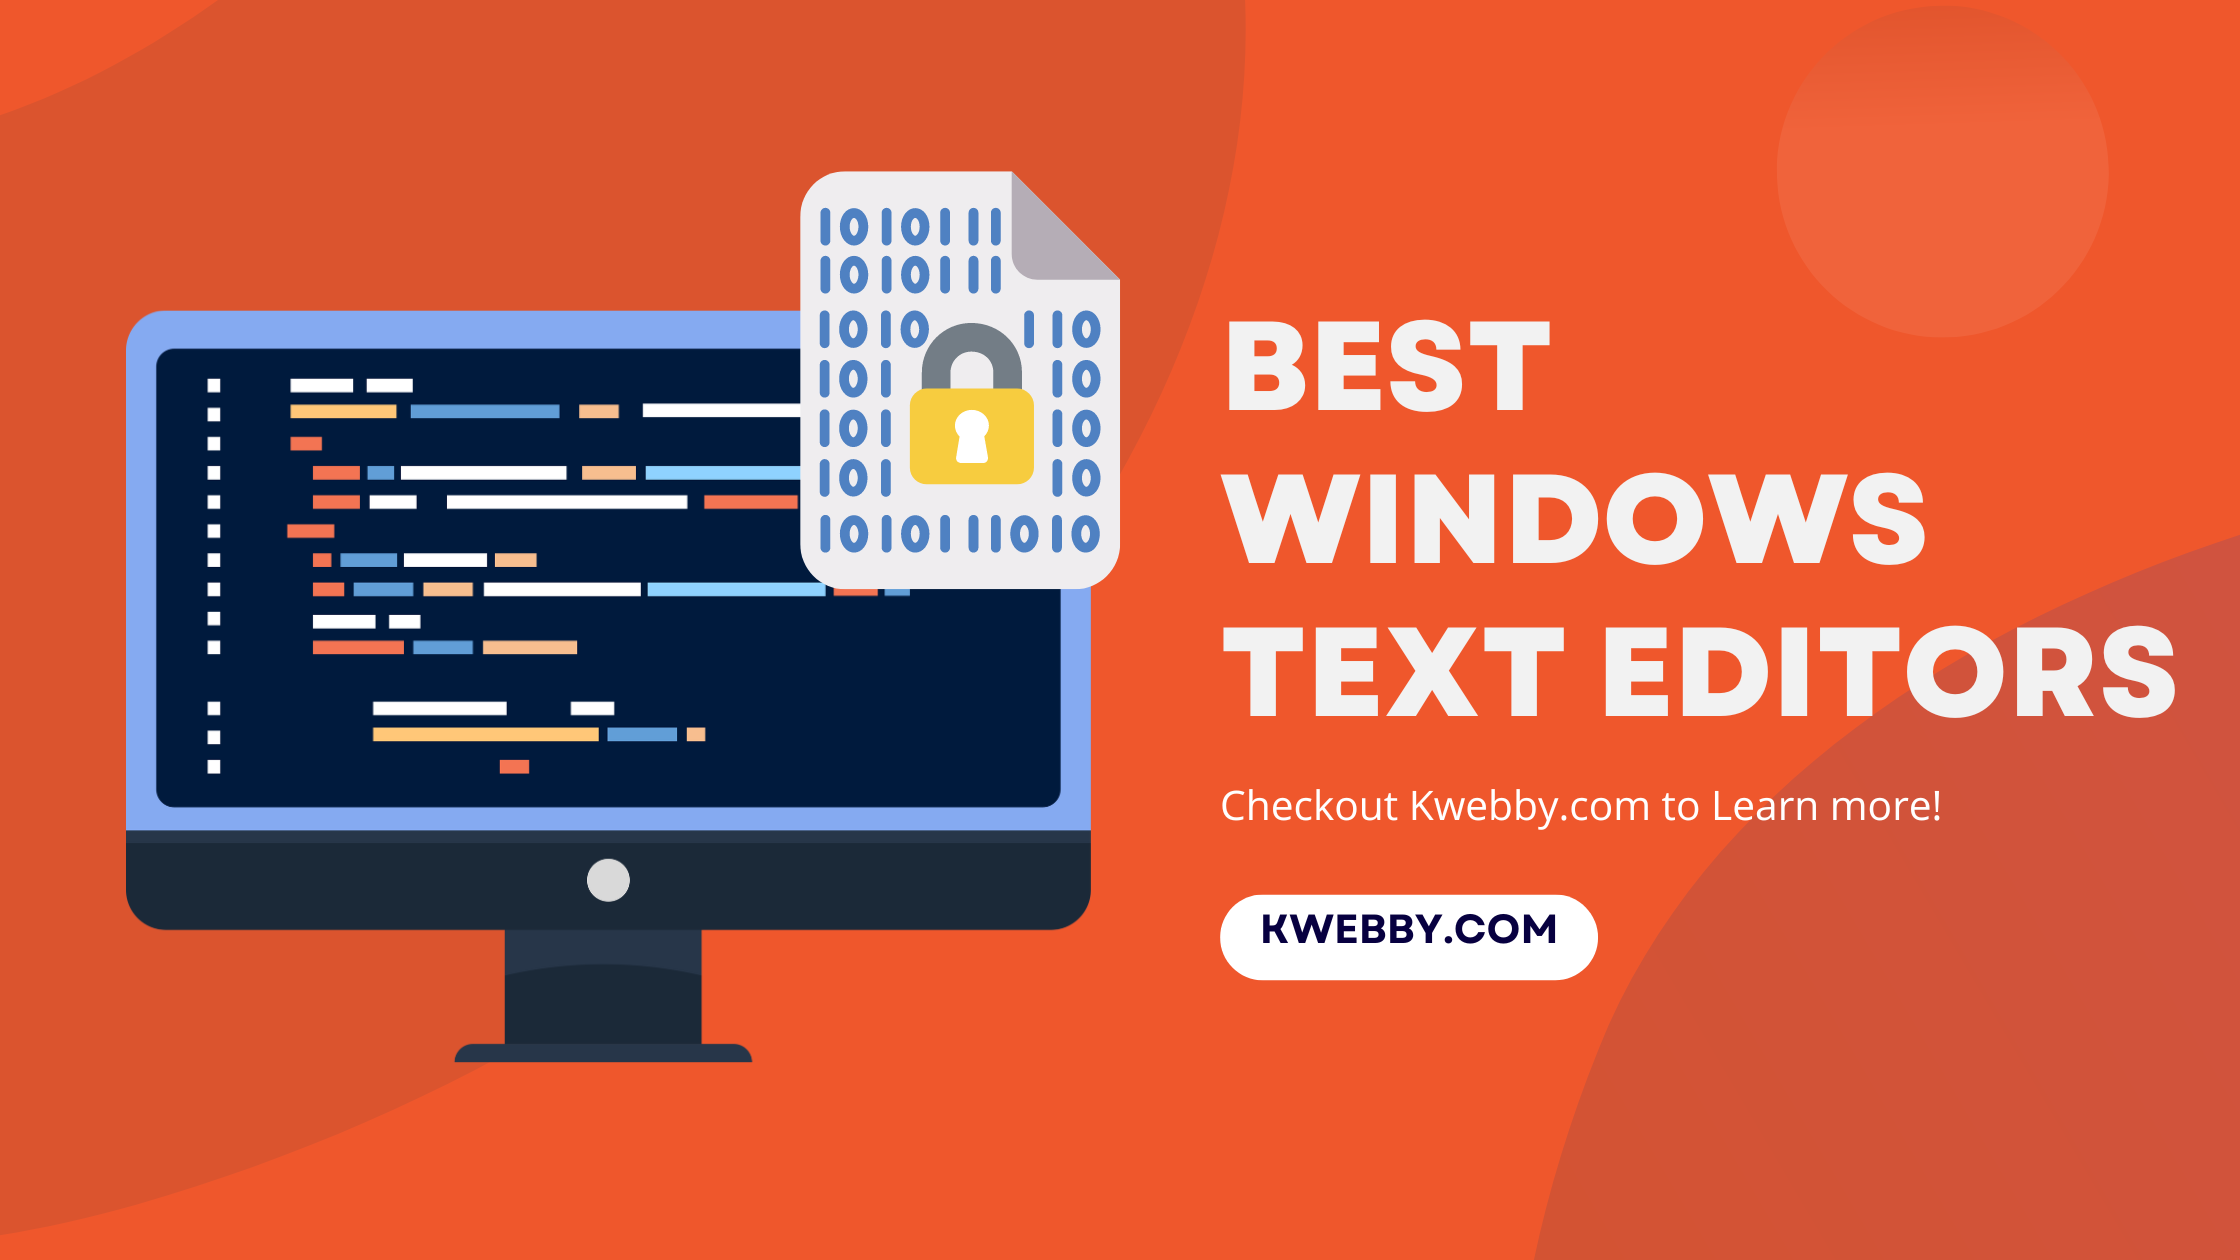 Best Windows Text Editors